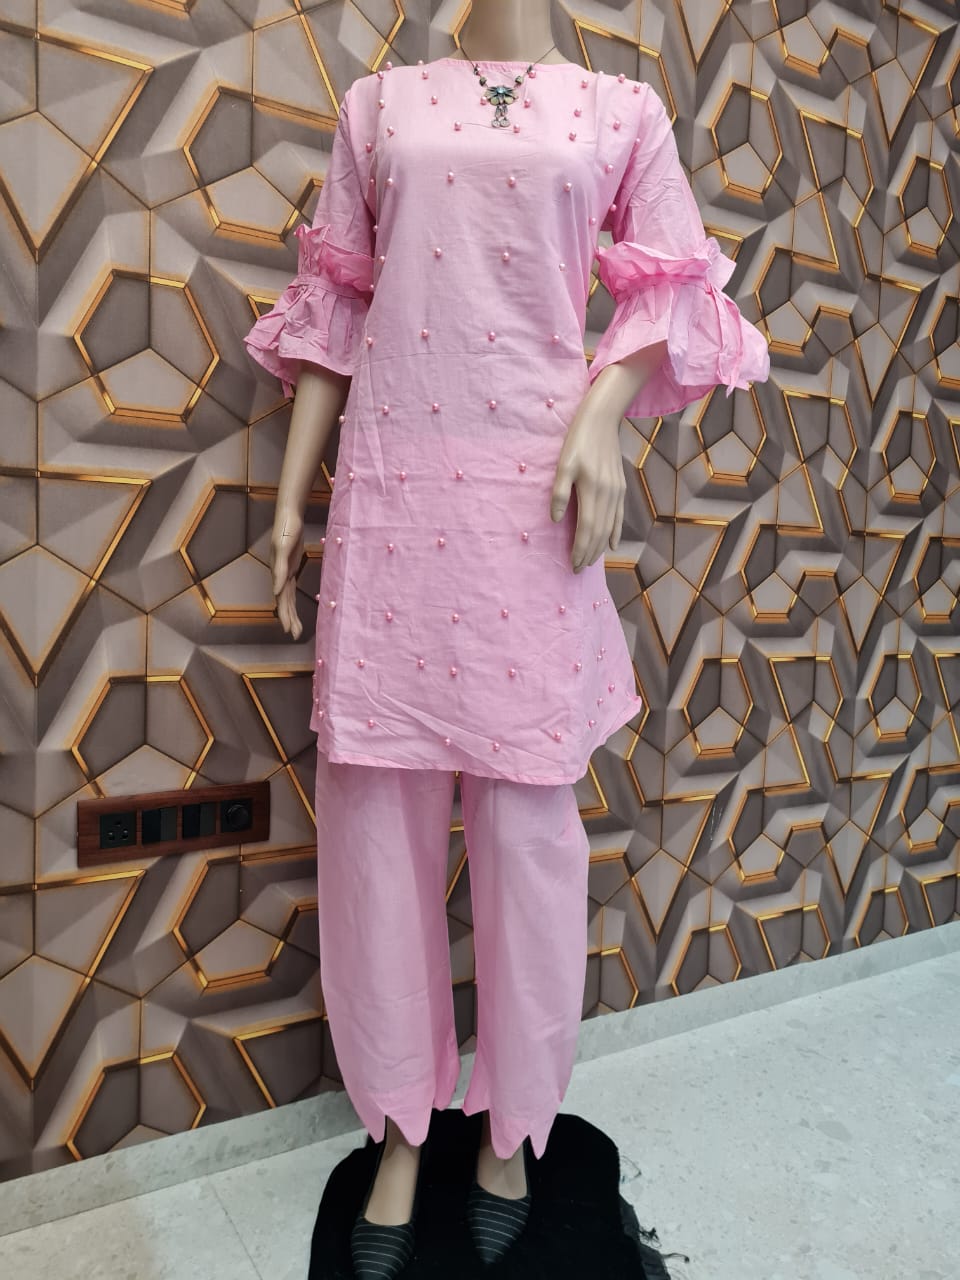 Fashionable Latest Design Regular Wear Khadi Kurti | Latest Kurti Designs